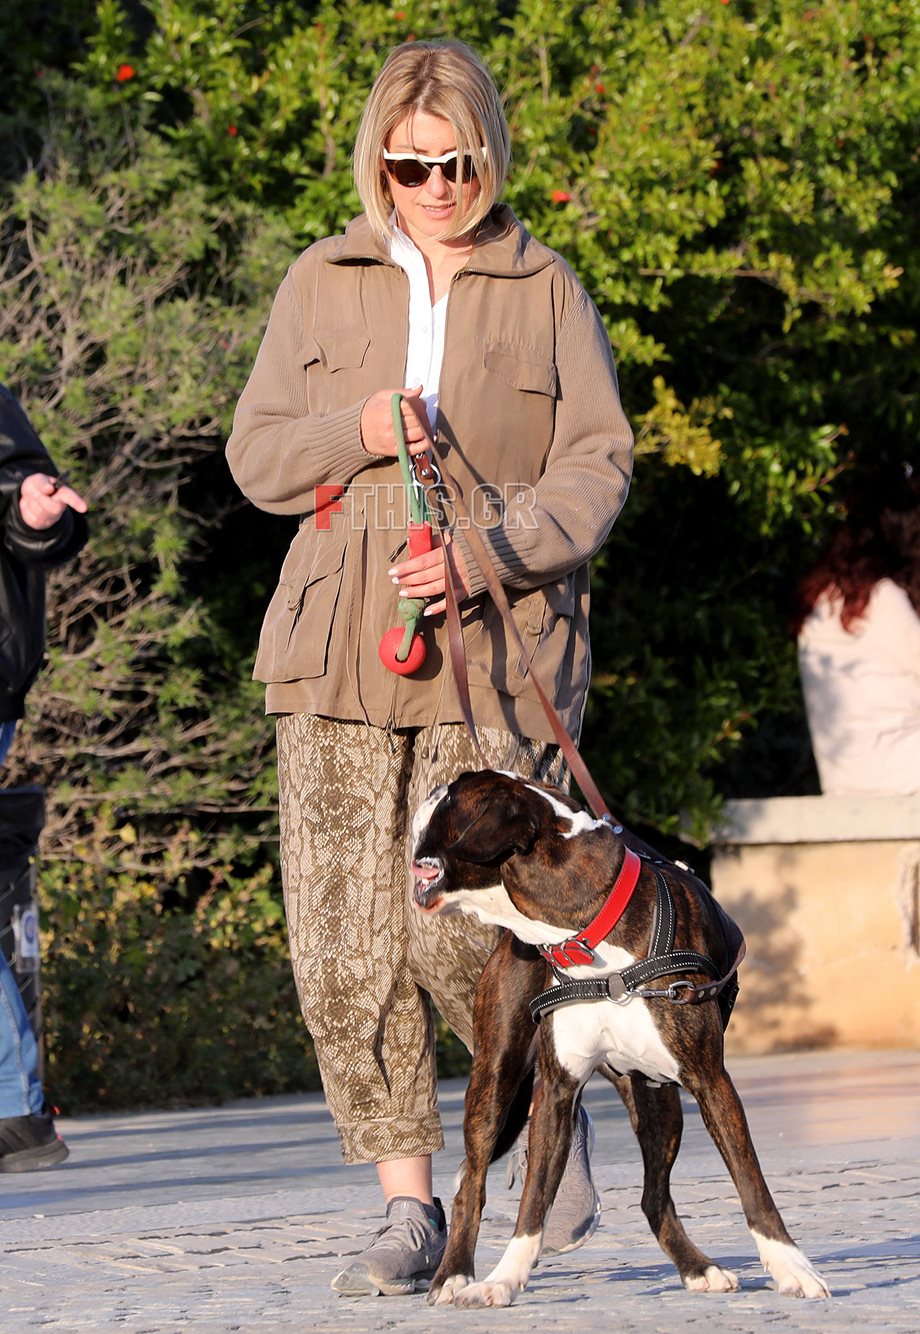 Paparazzi! Η Σία Κοσιώνη με casual look σε πρόσφατη έξοδό της με τον σκύλο της